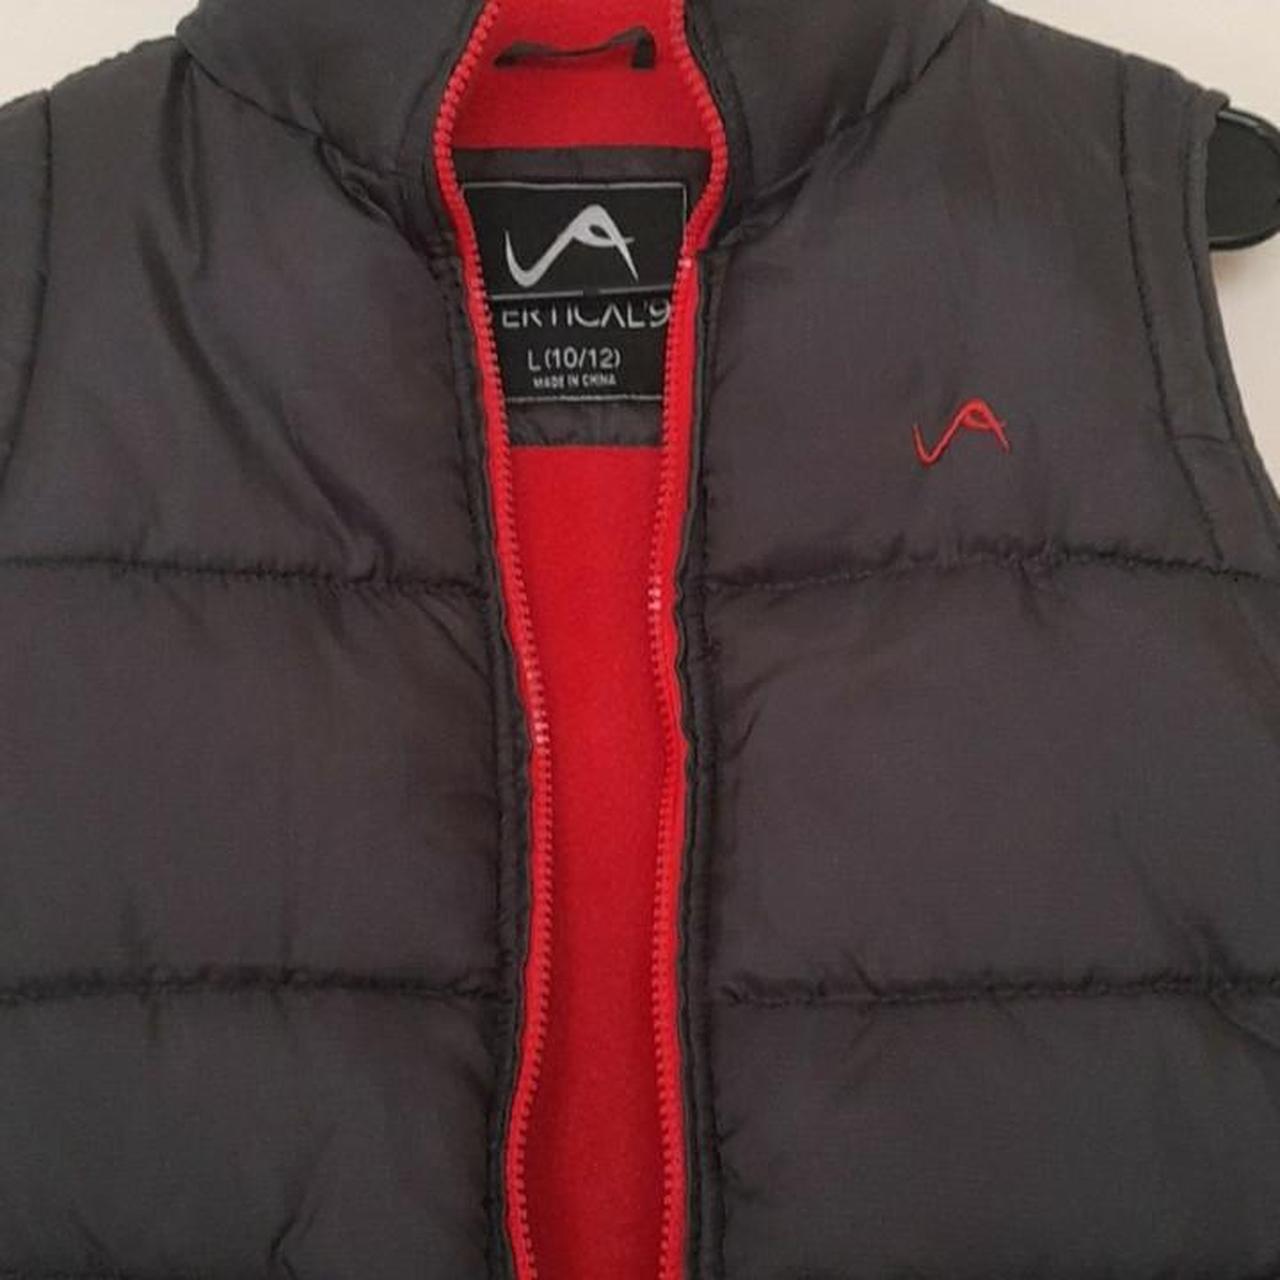 Product Image 2 - Boy's vertical'9 coat,
#boys jacket
#winter coat